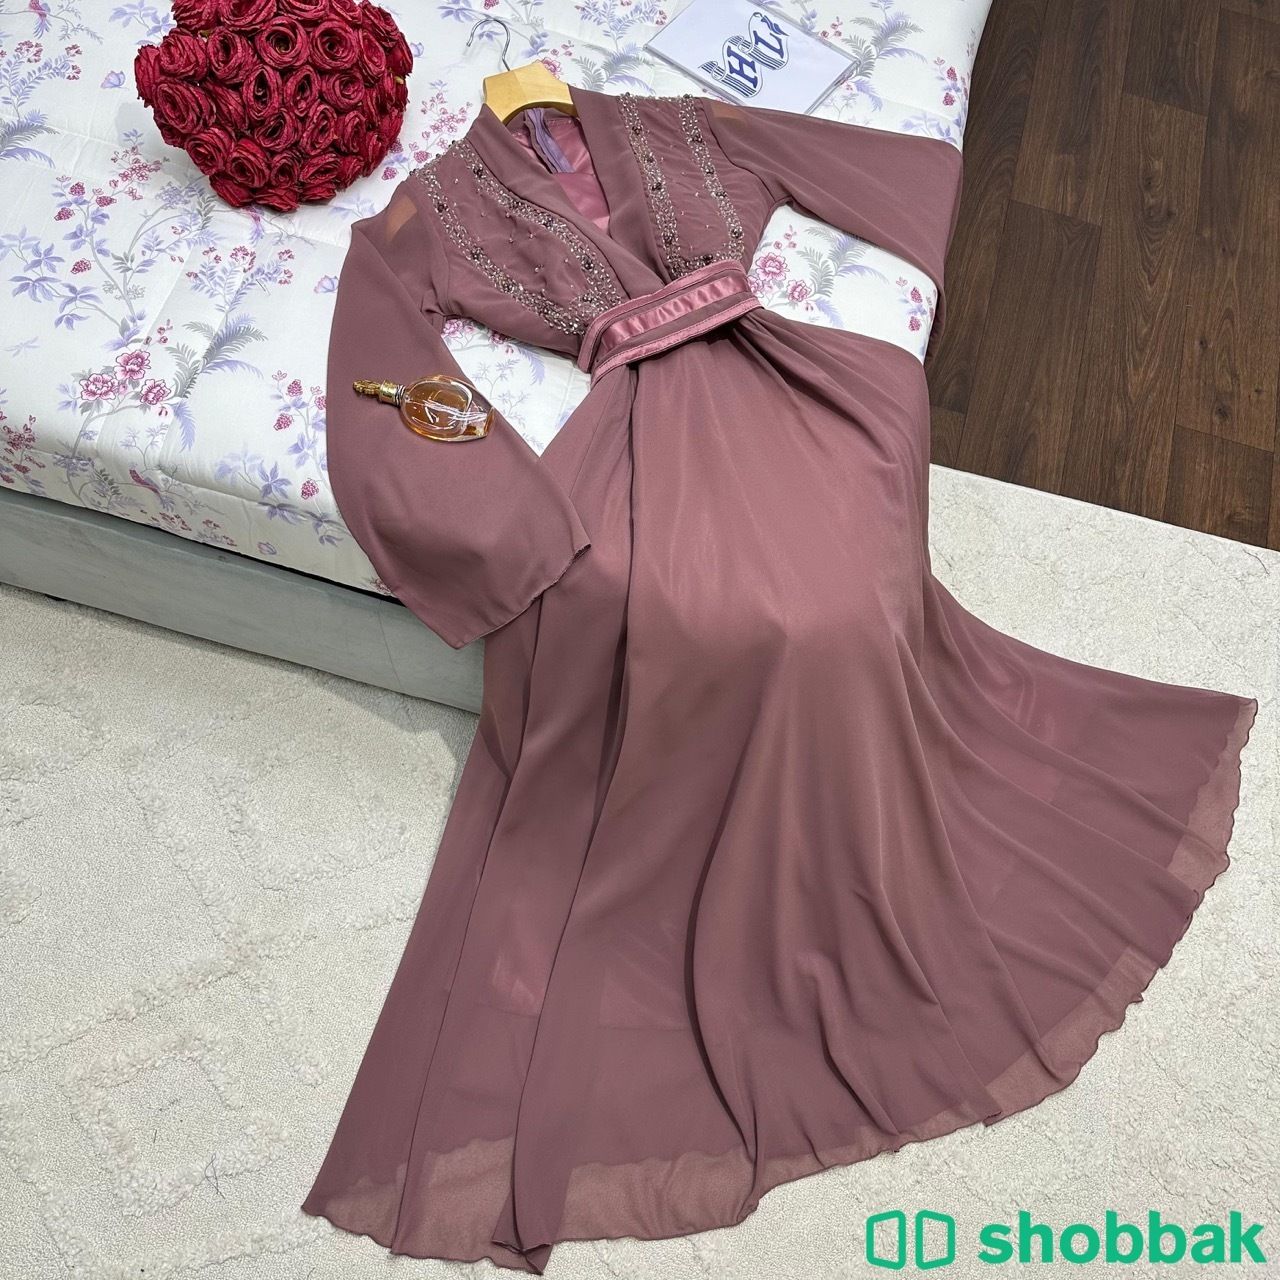 فستان جورجيت مع تطريز  Shobbak Saudi Arabia